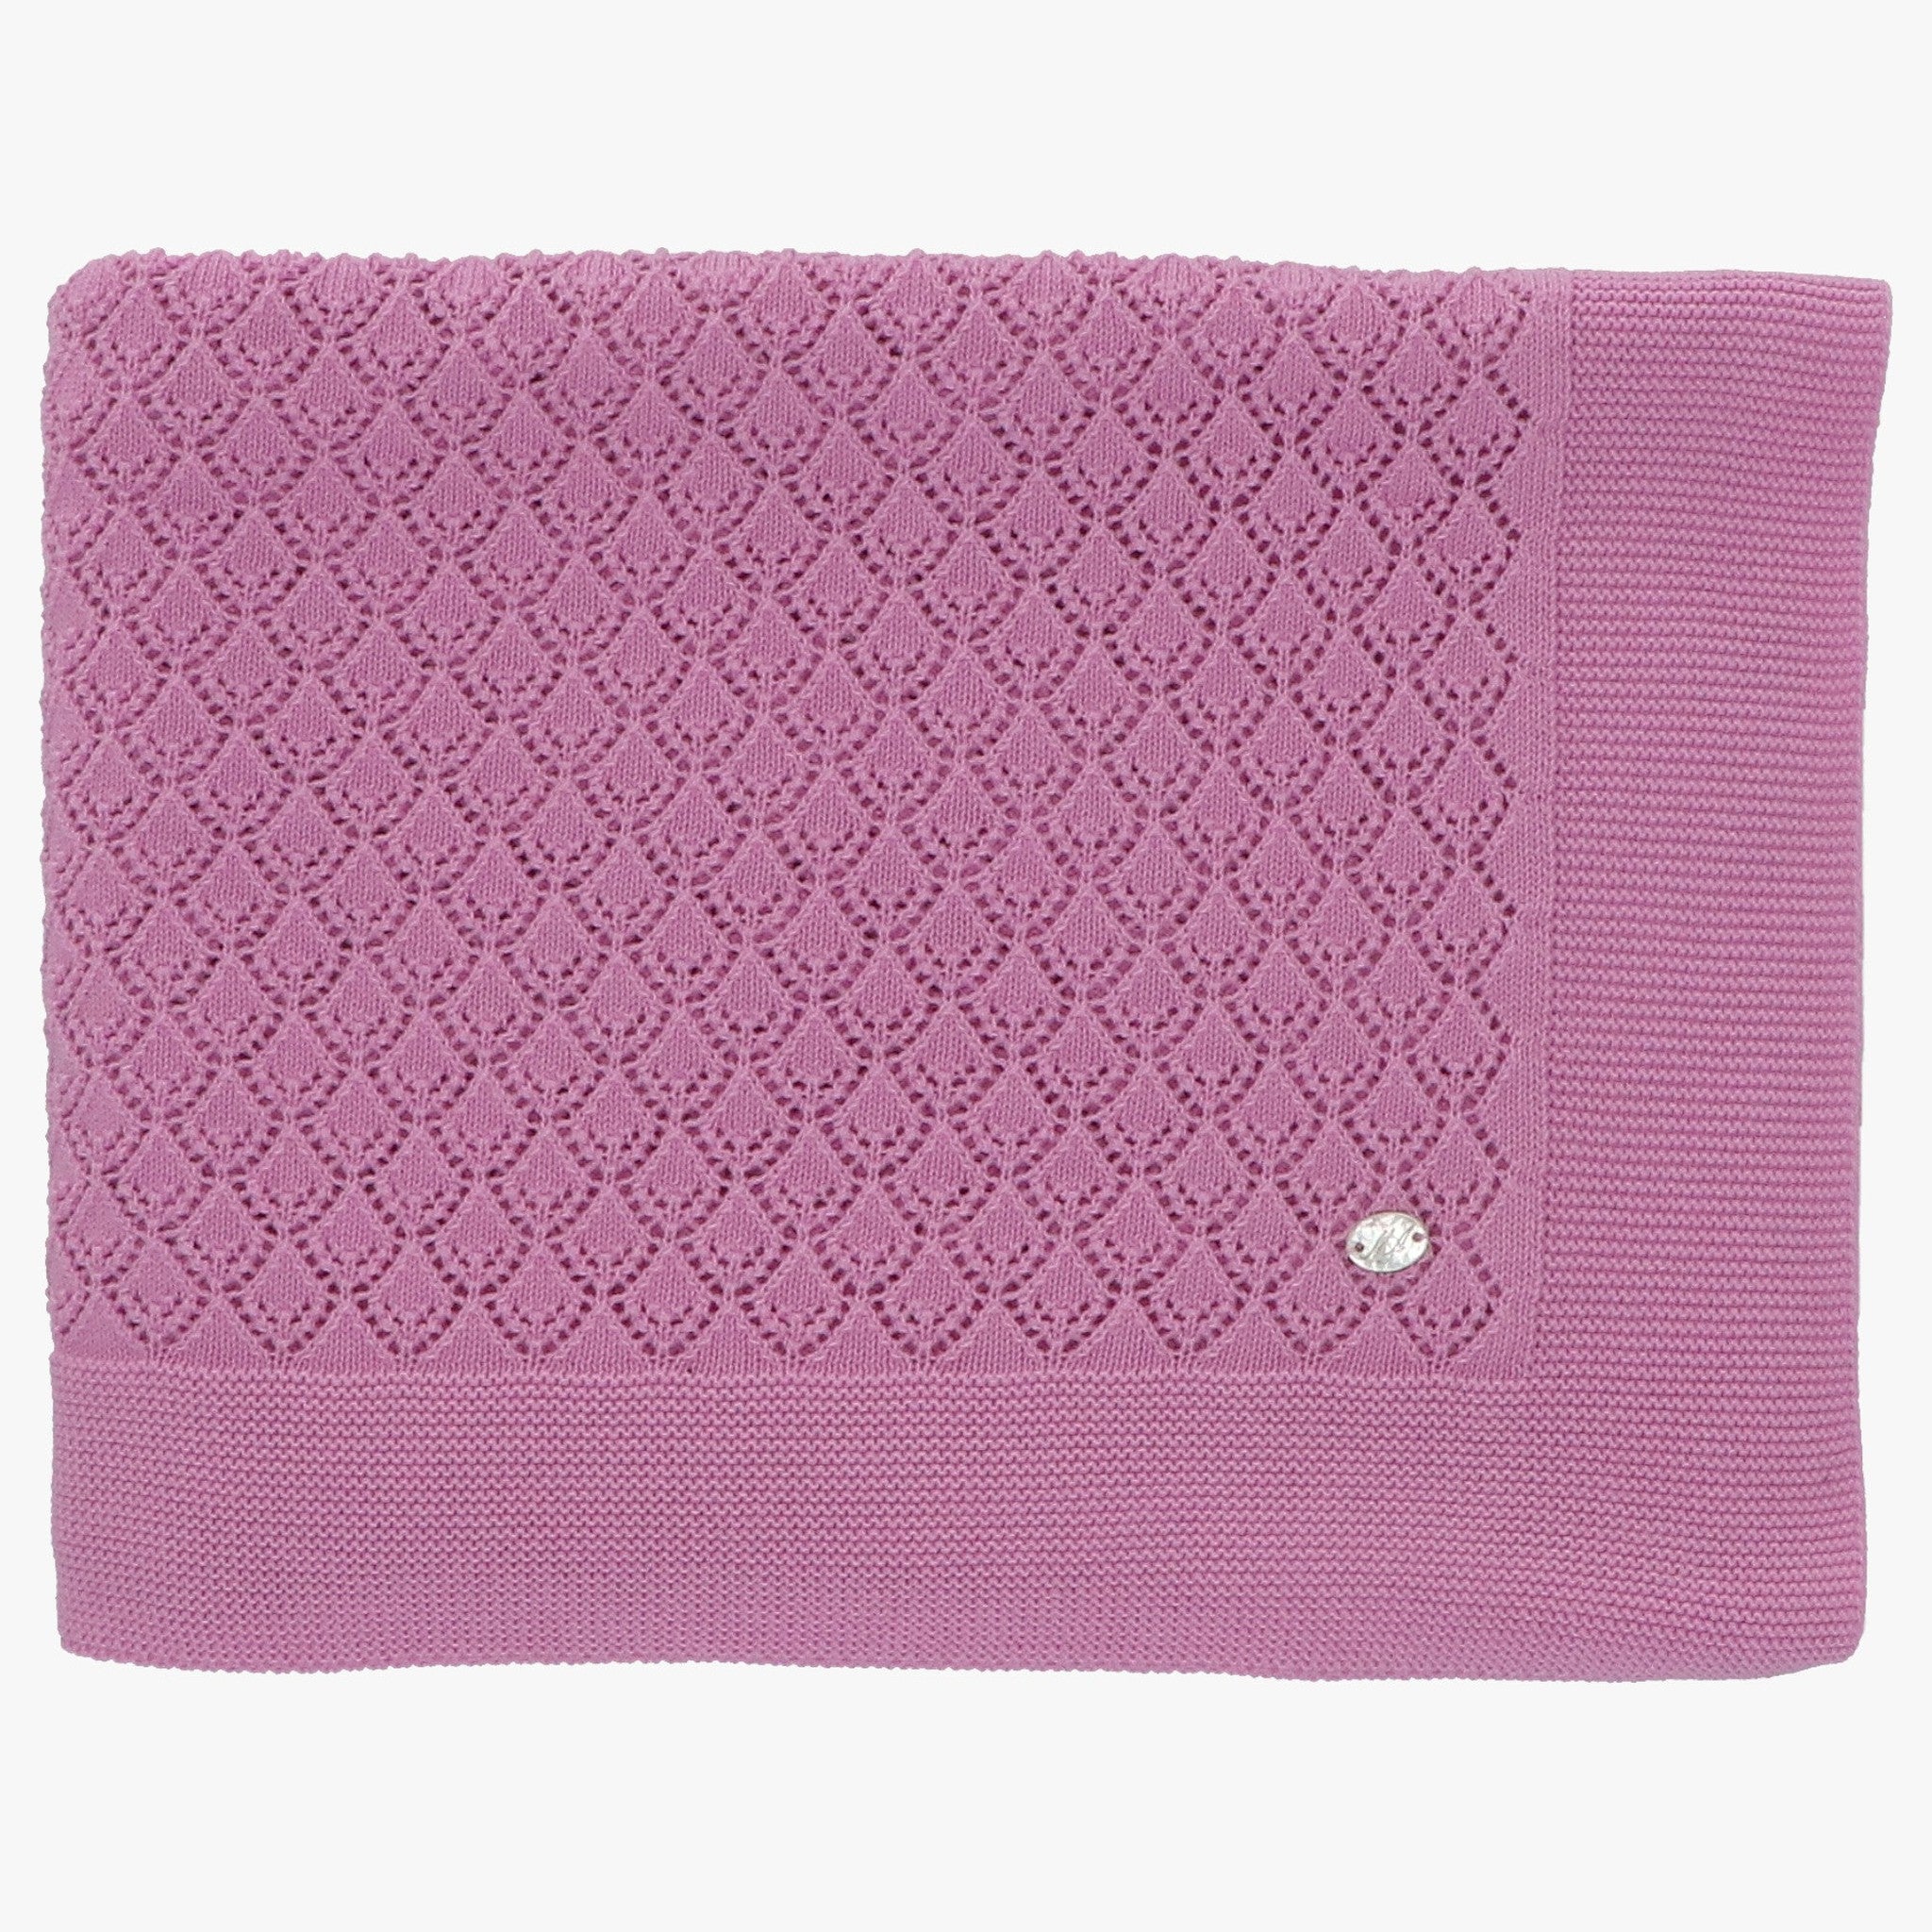 Unisex Knit Calado Blanket - Several Colors